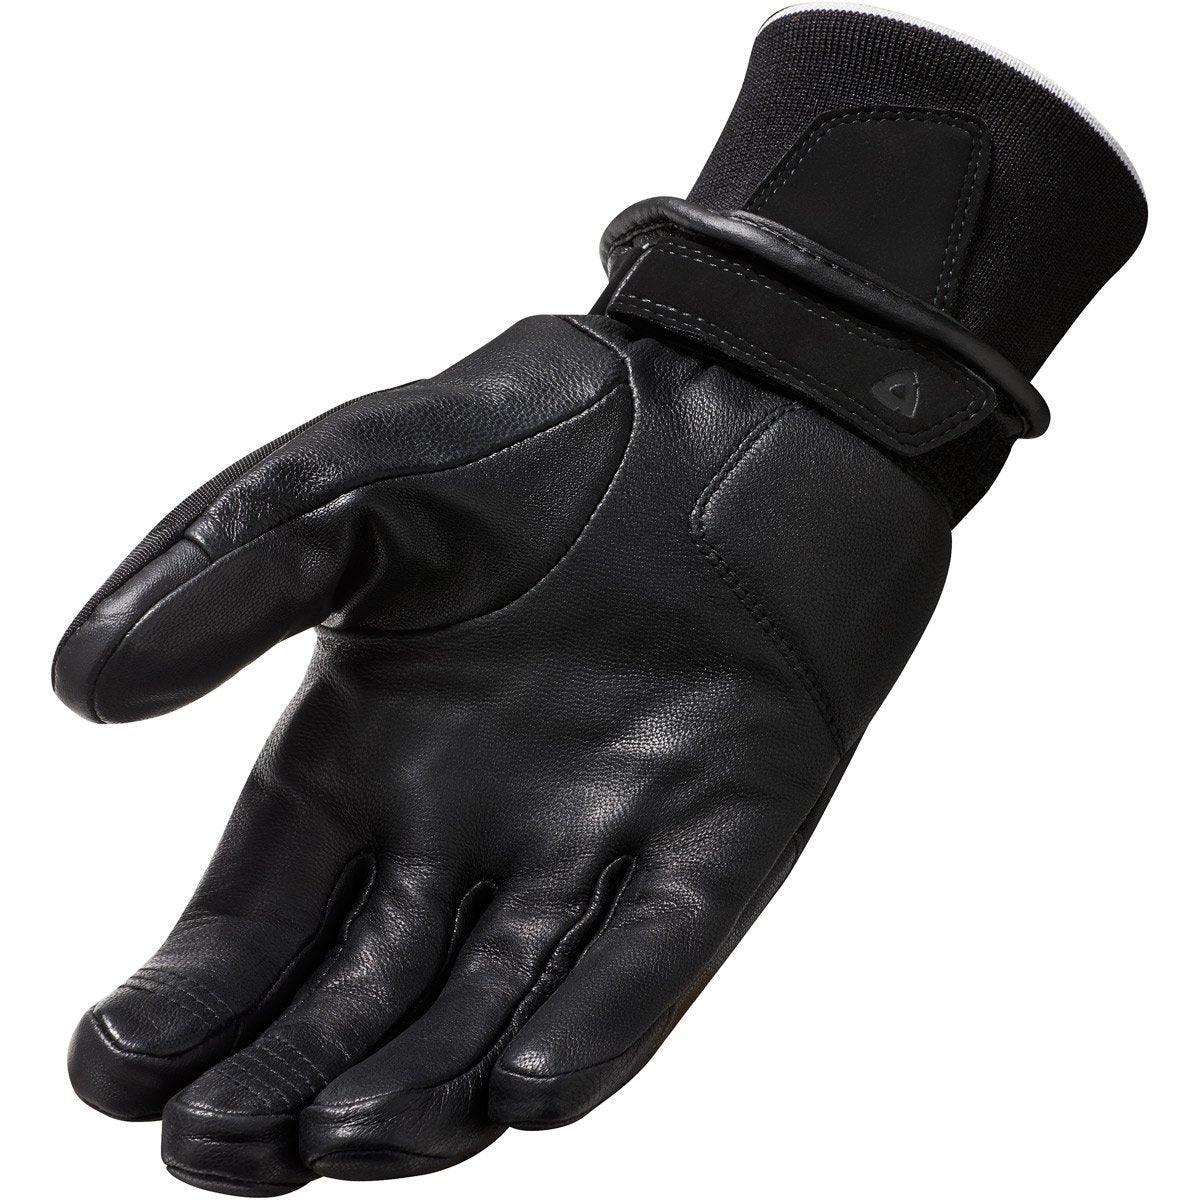 Rev It! Kryptonite 2 Gloves GTX Black - Winter Motorcycle Gloves